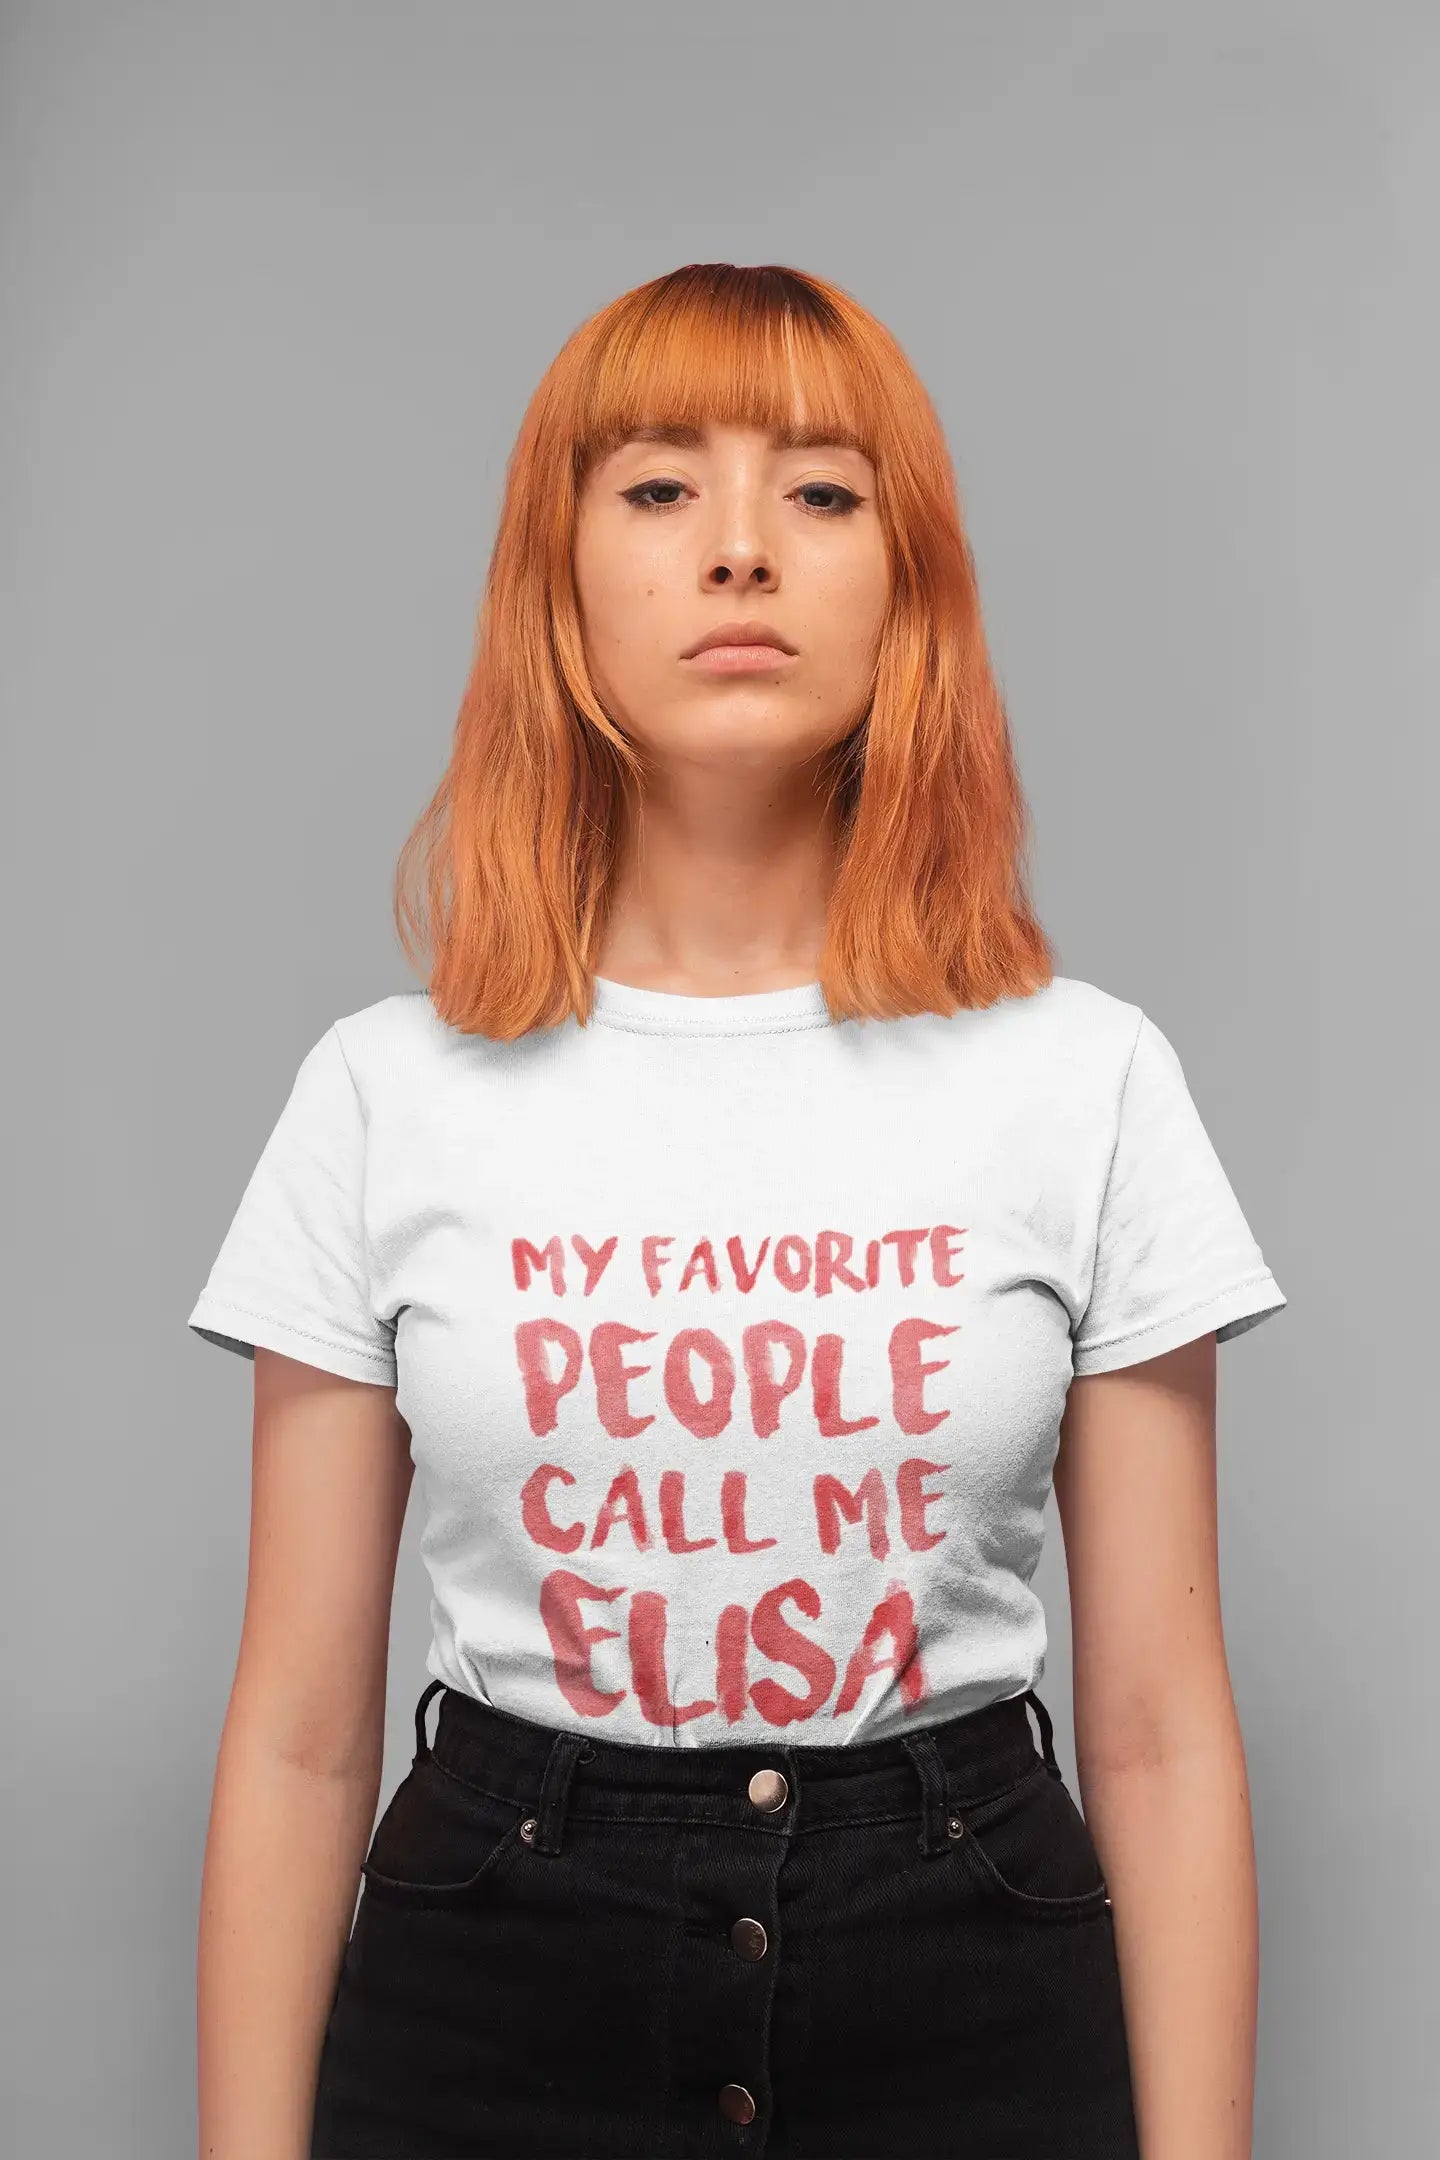 My favorite people call me Elisa , White, Women's Short Sleeve Round Neck T-shirt, gift t-shirt 00364